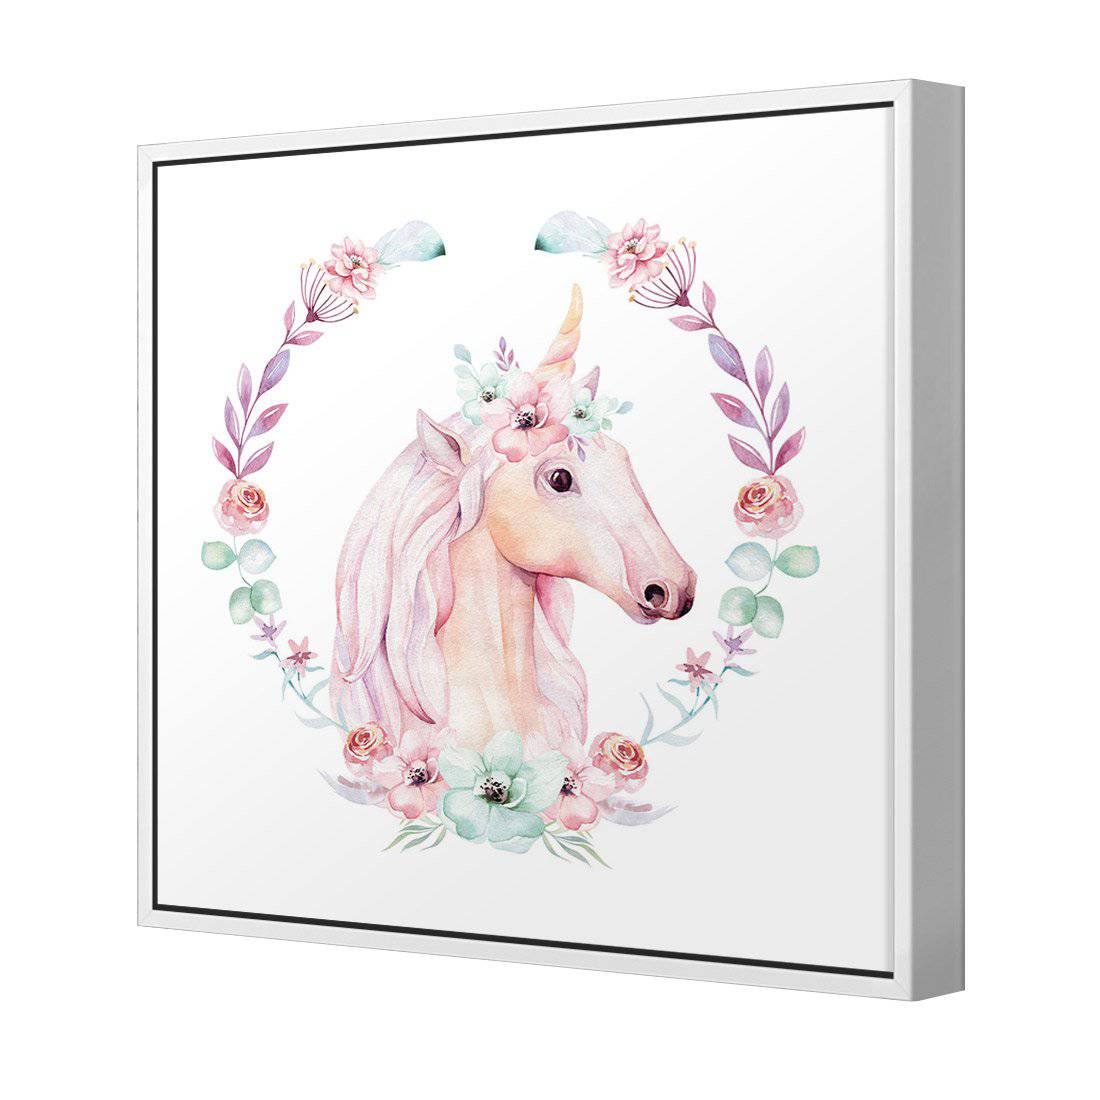 Fairytale Pony Canvas Art-Canvas-Wall Art Designs-30x30cm-Canvas - White Frame-Wall Art Designs